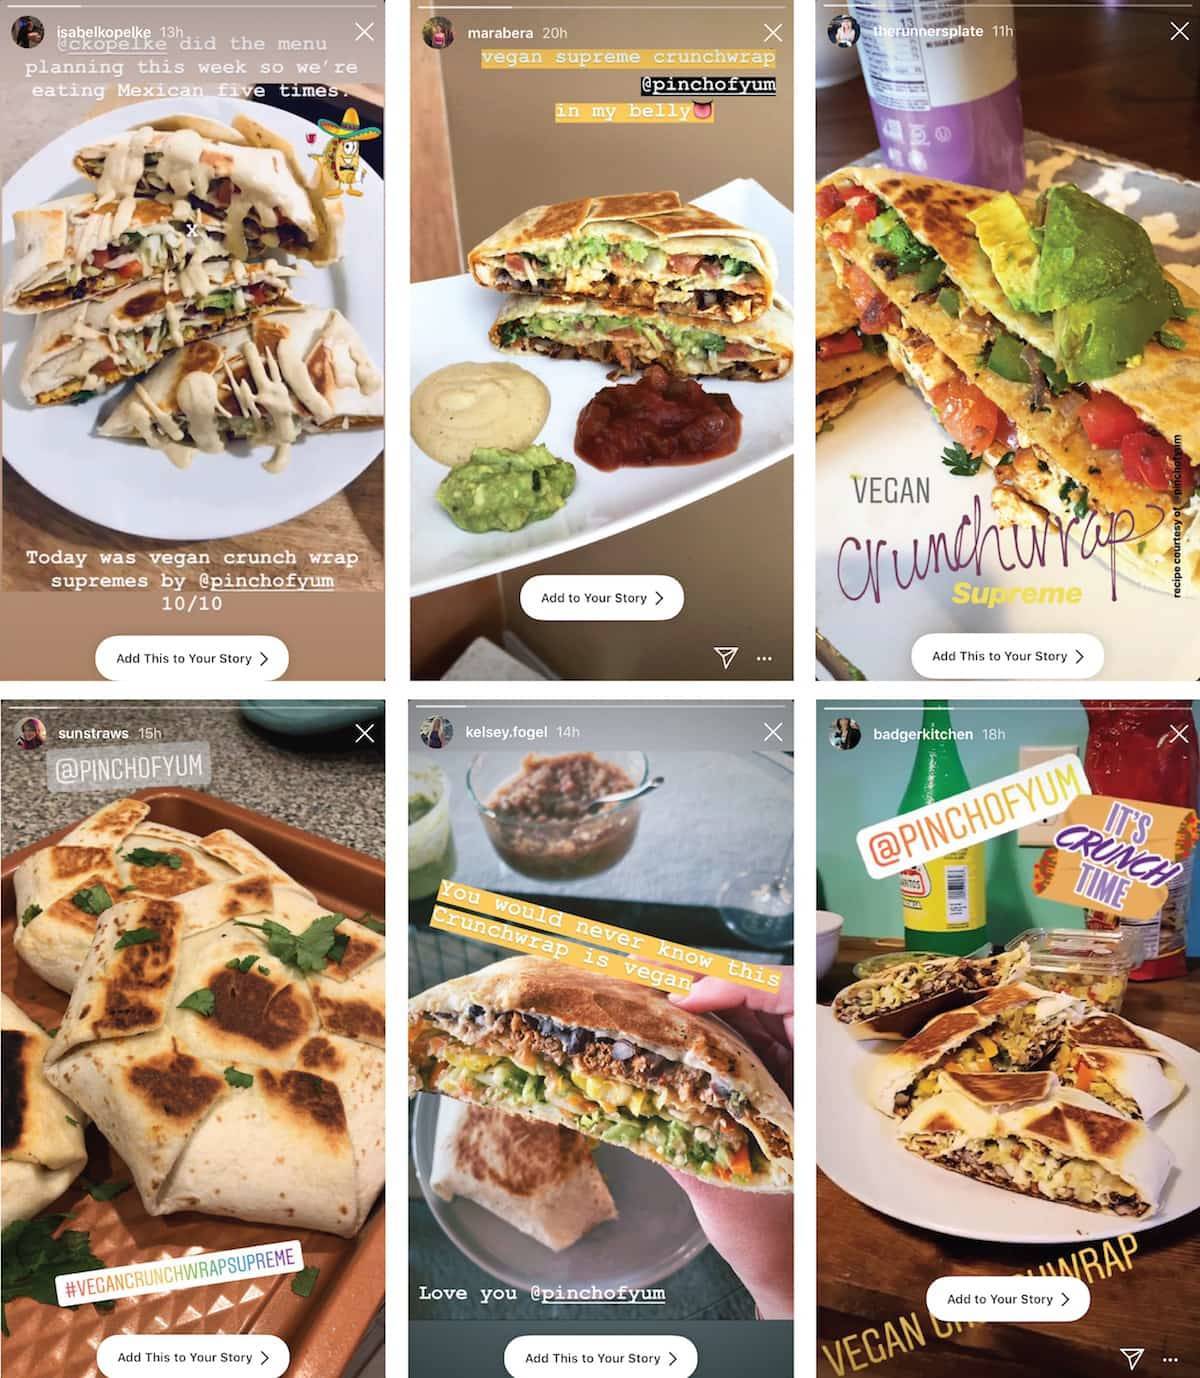 Vegan crunchwrap images from Instagram.